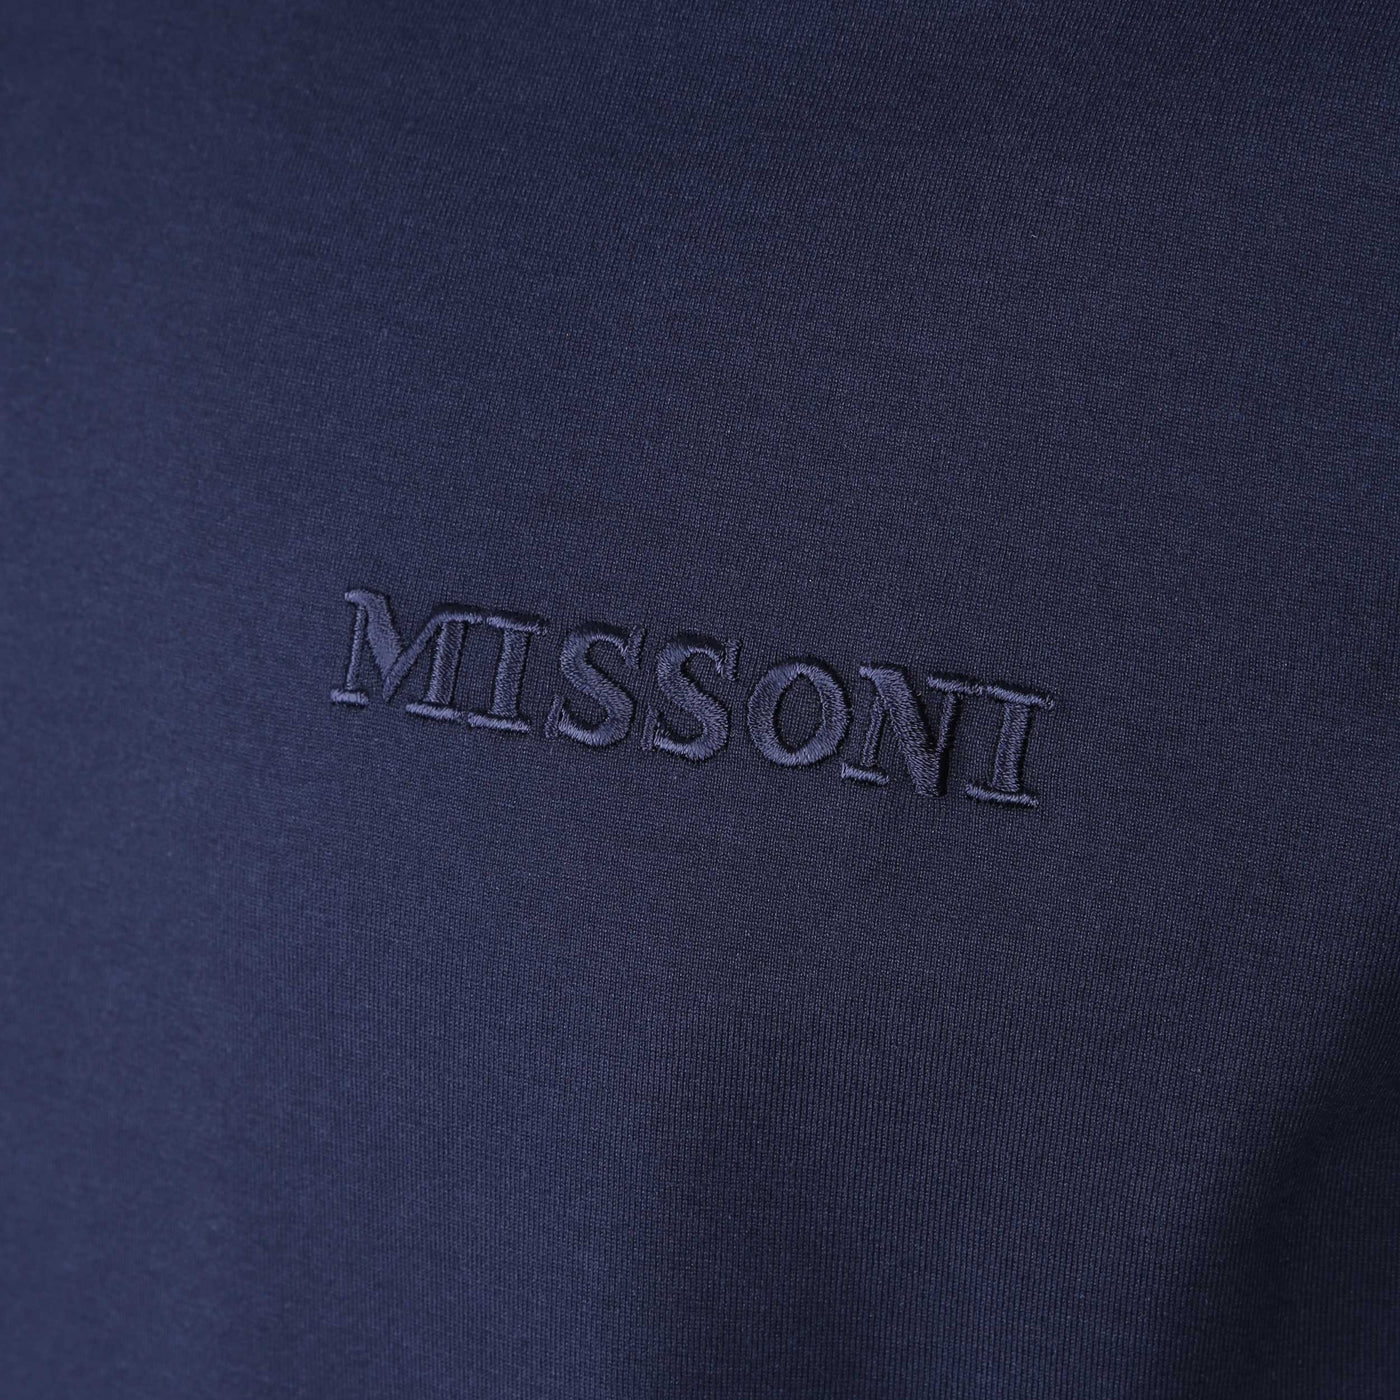 Missoni Stripe Collar T-Shirt in Navy Logo